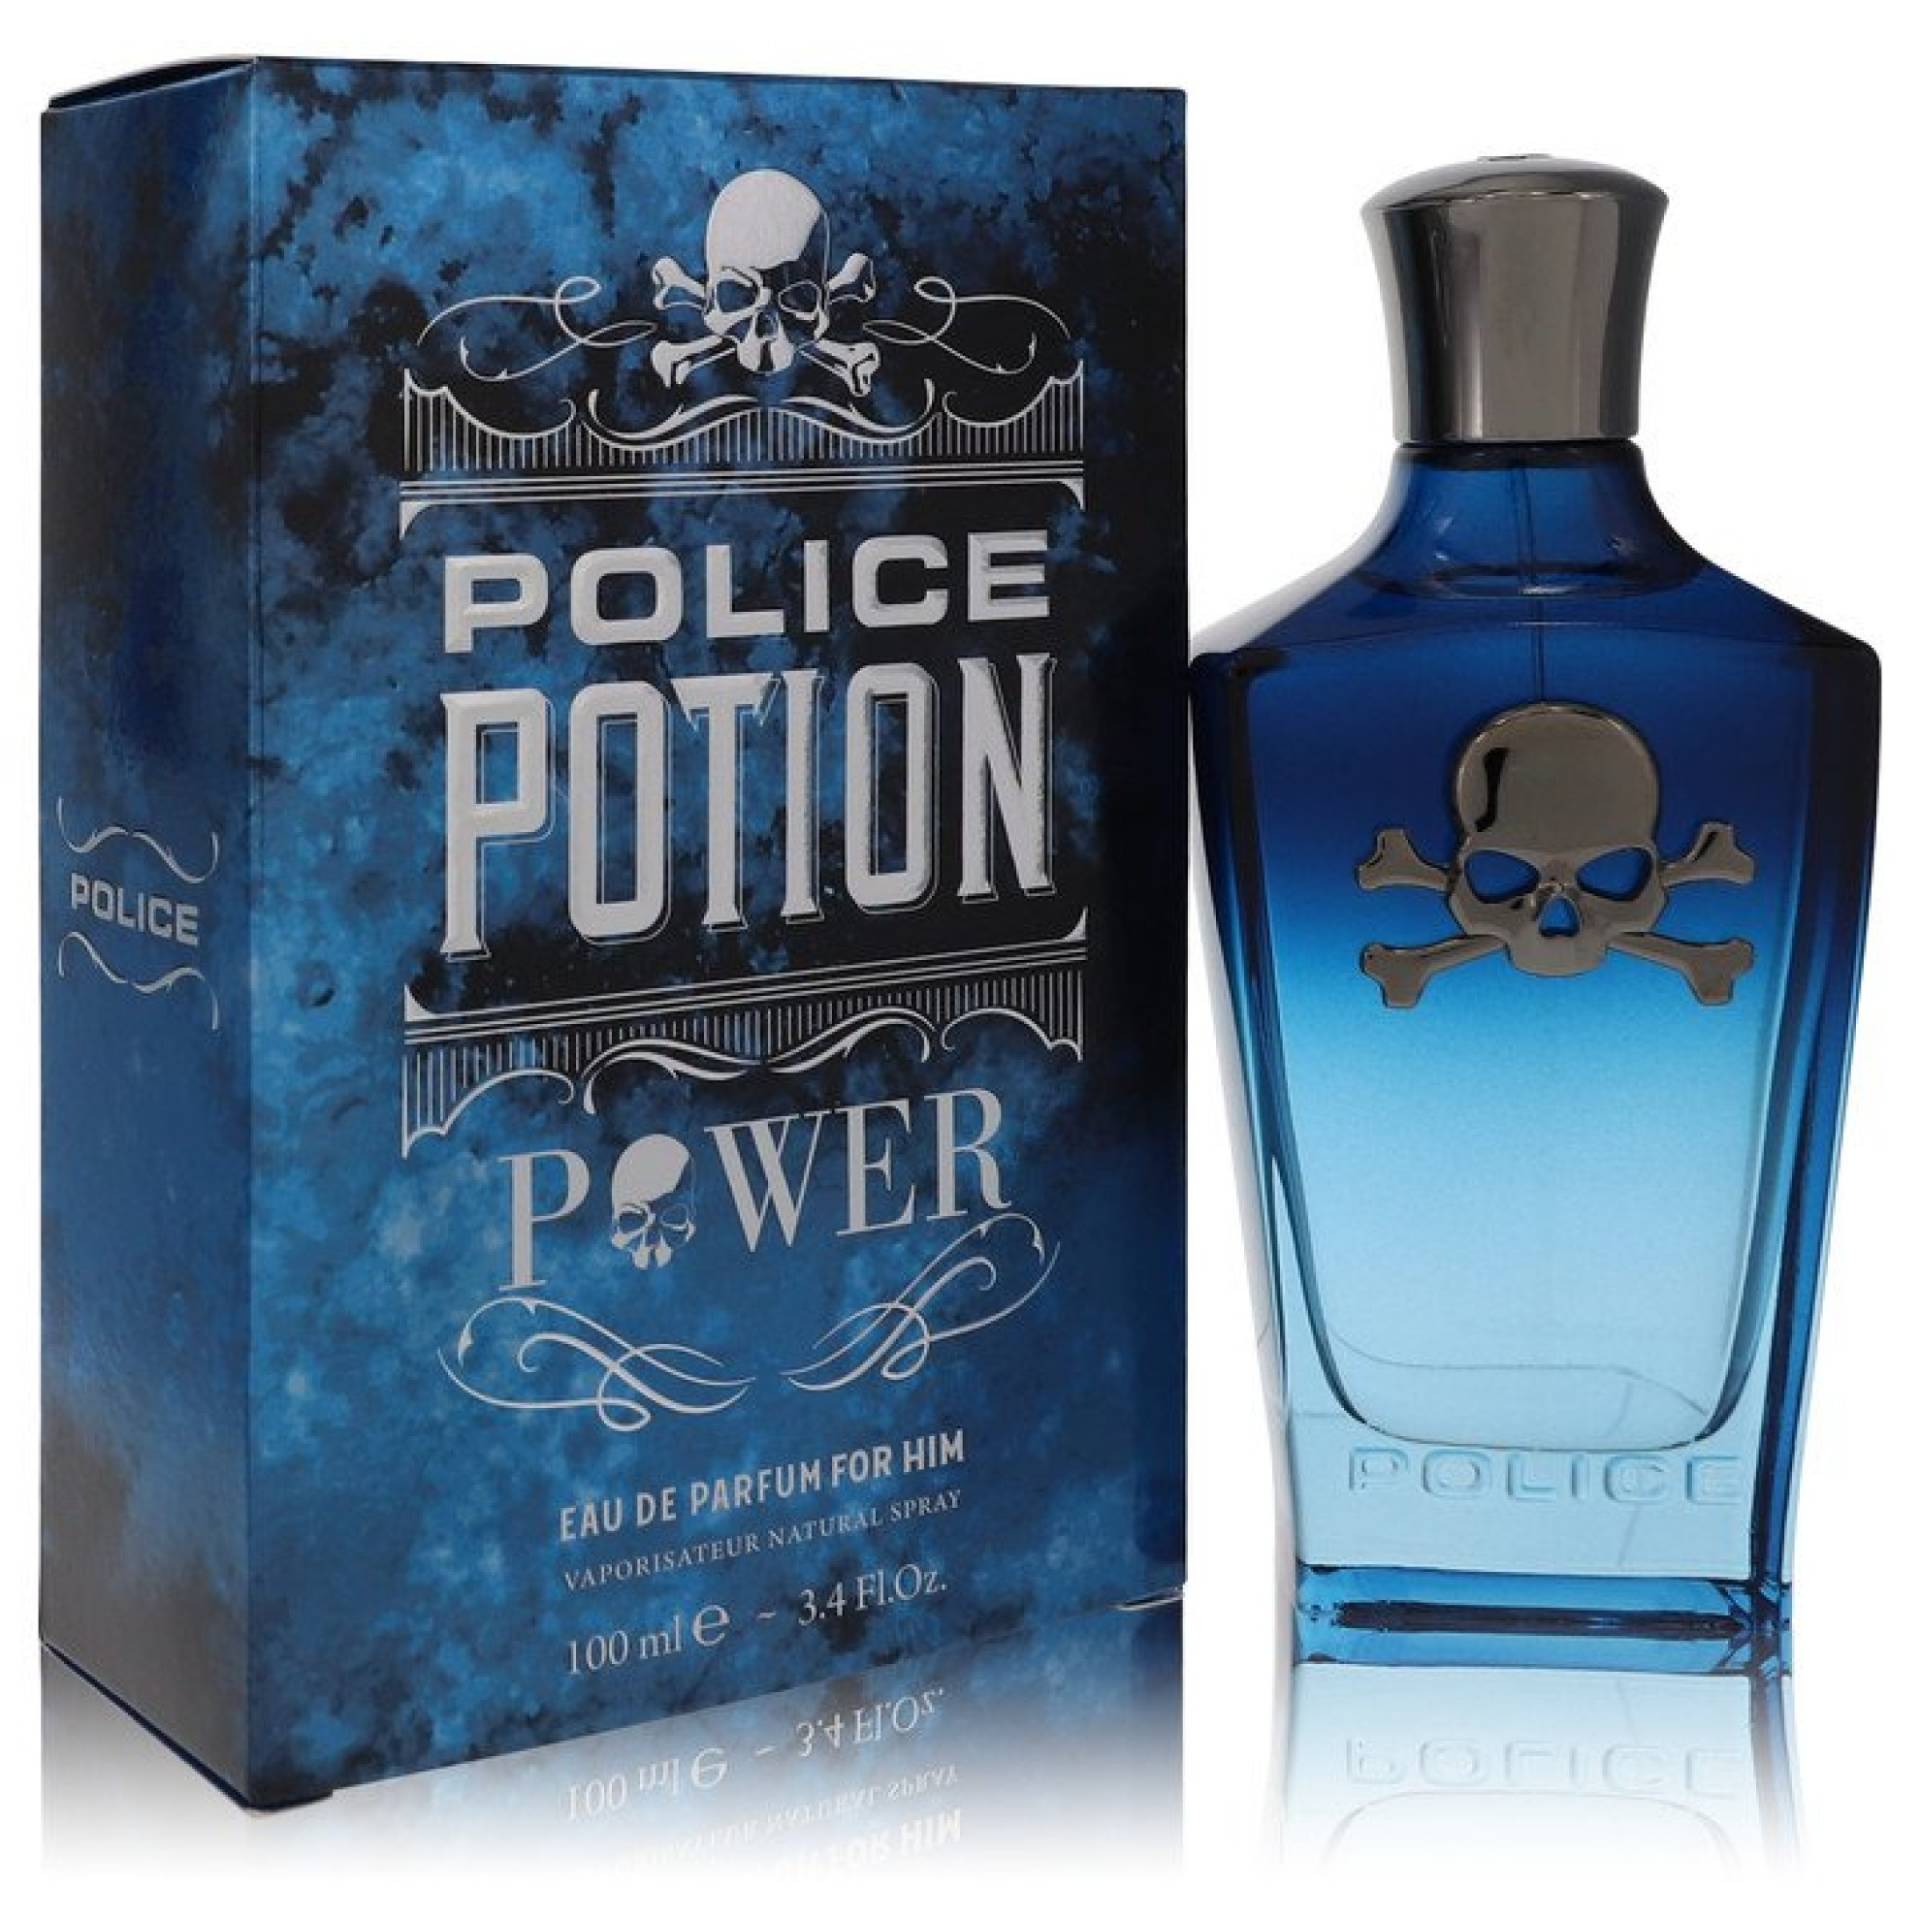 Police Colognes Police Potion Power Eau De Parfum Spray 100 ml